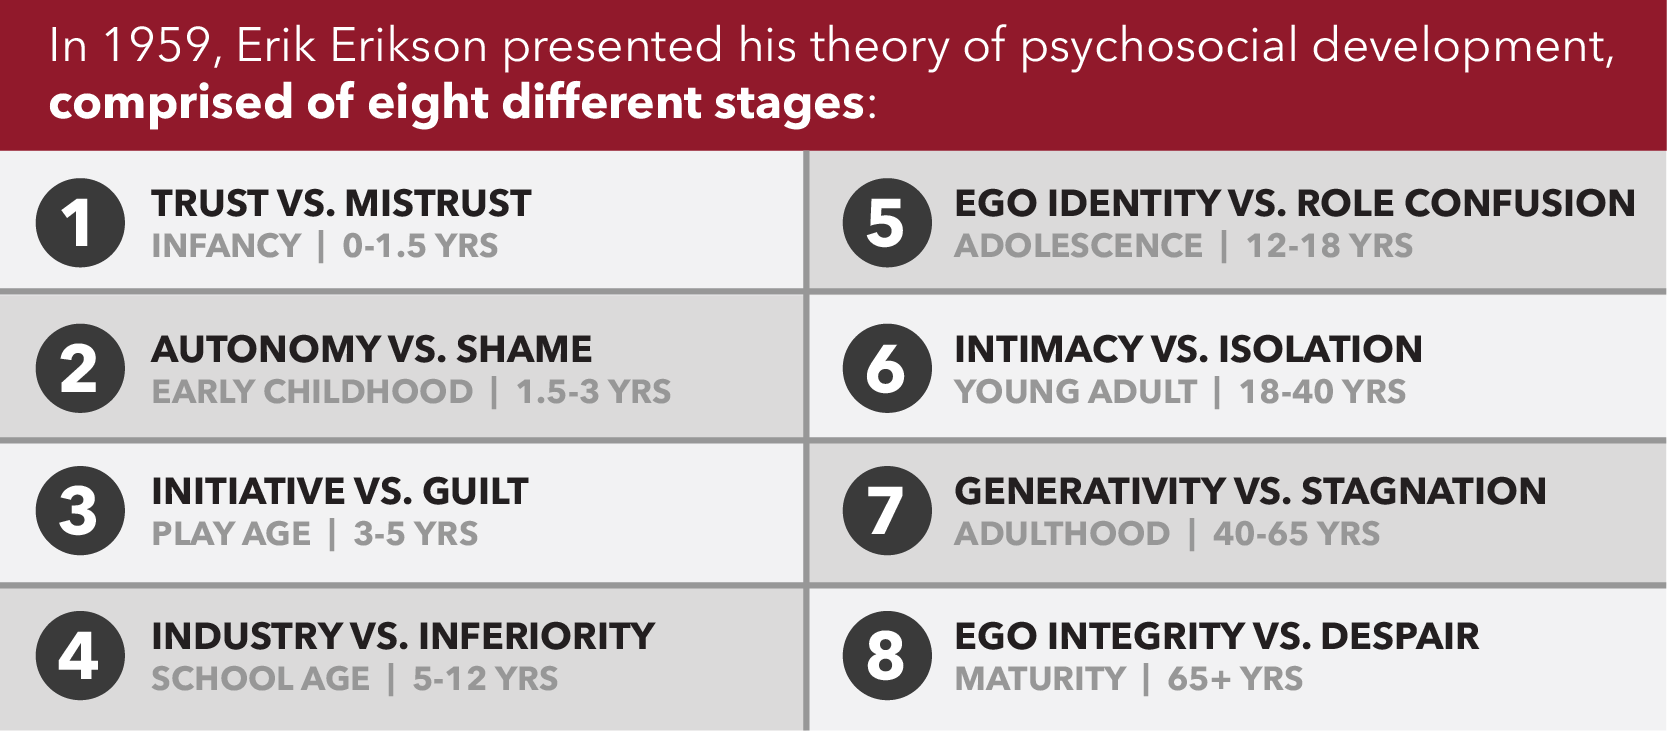 Erik Erikson's Theory of Psychosocial Development